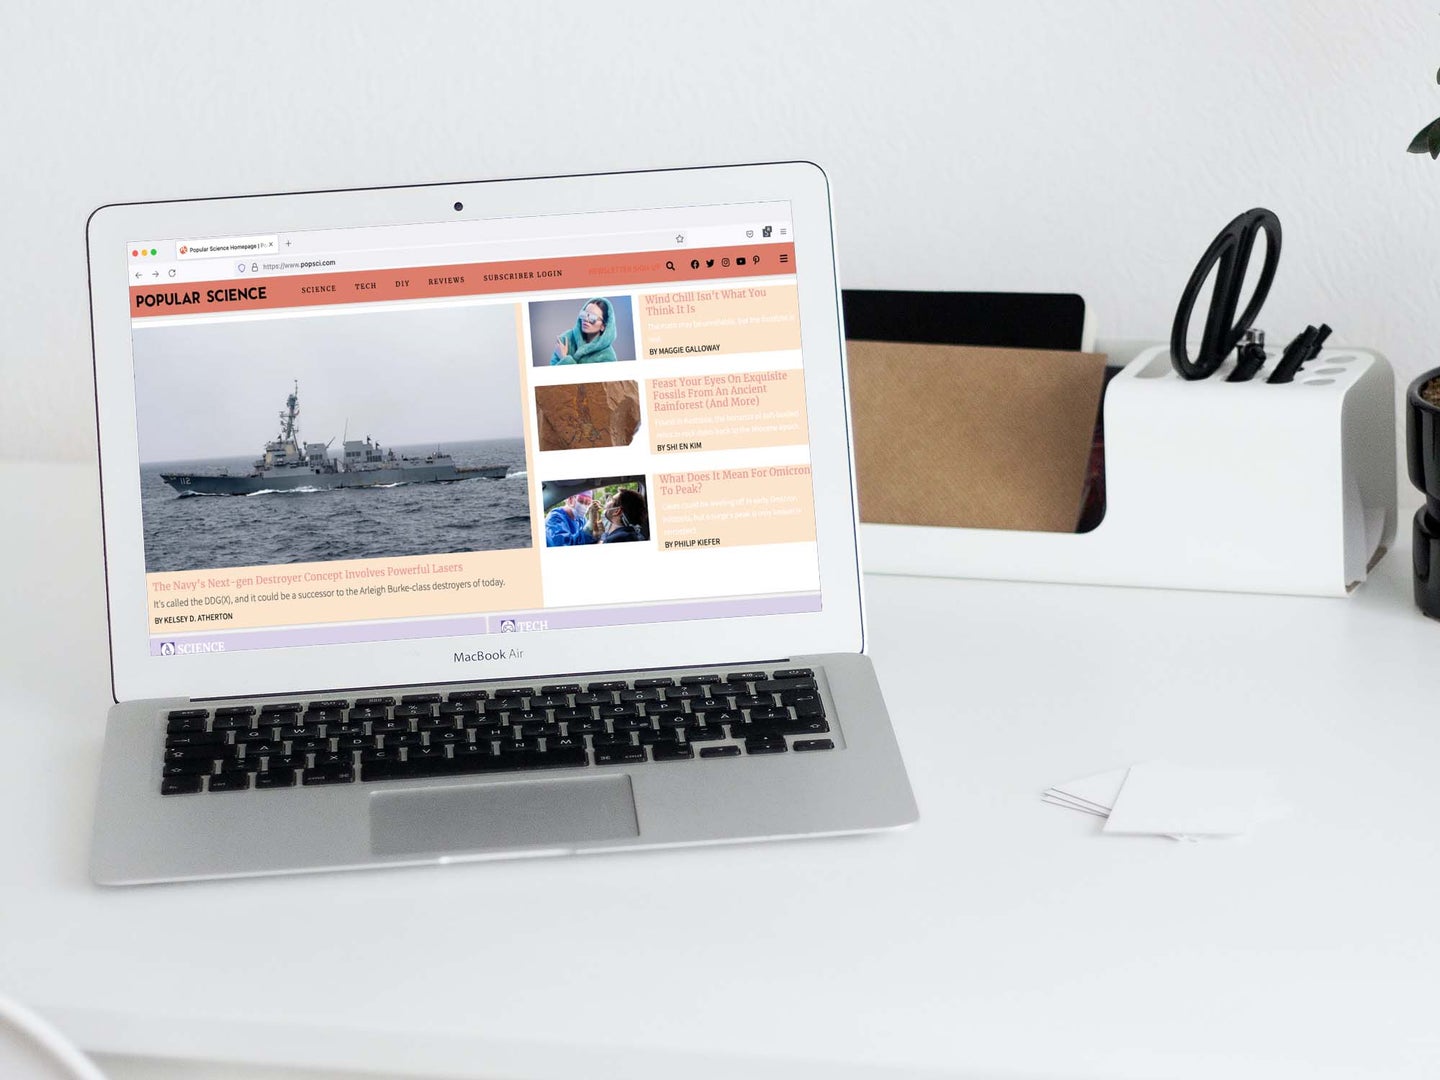 macbook air on white desk showing popsci website